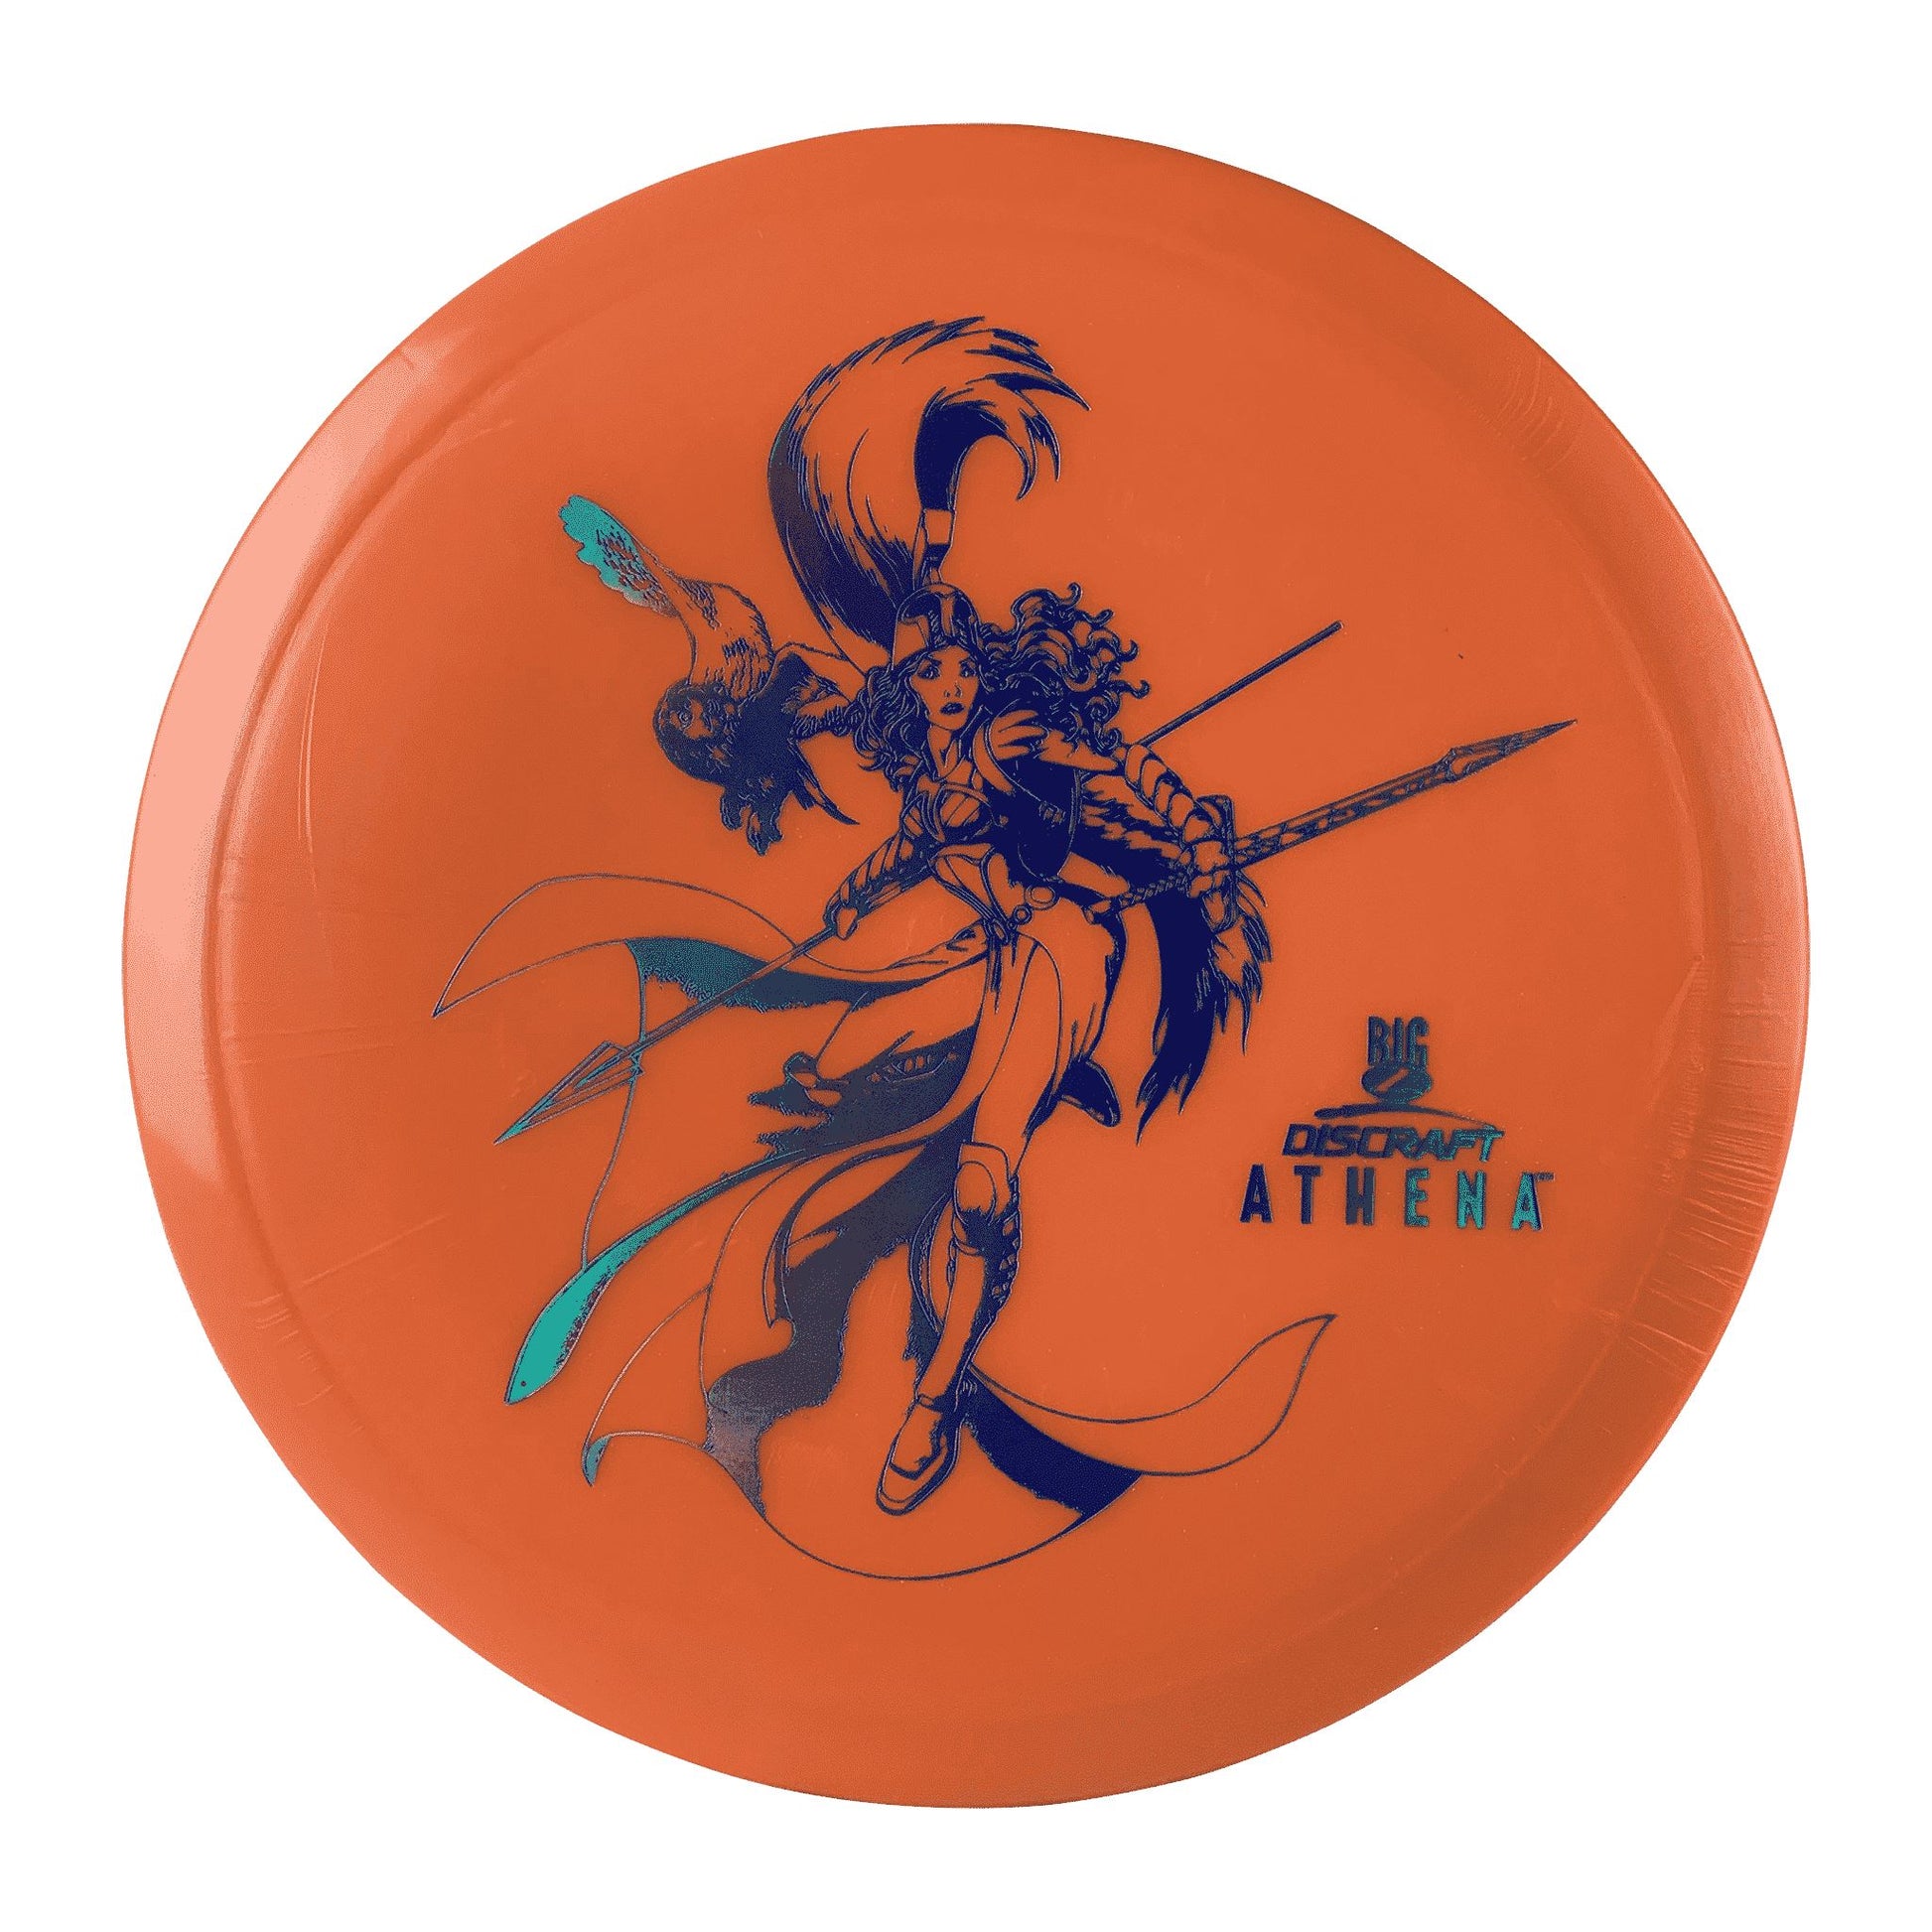 Big Z Athena Disc Discraft orange 173 